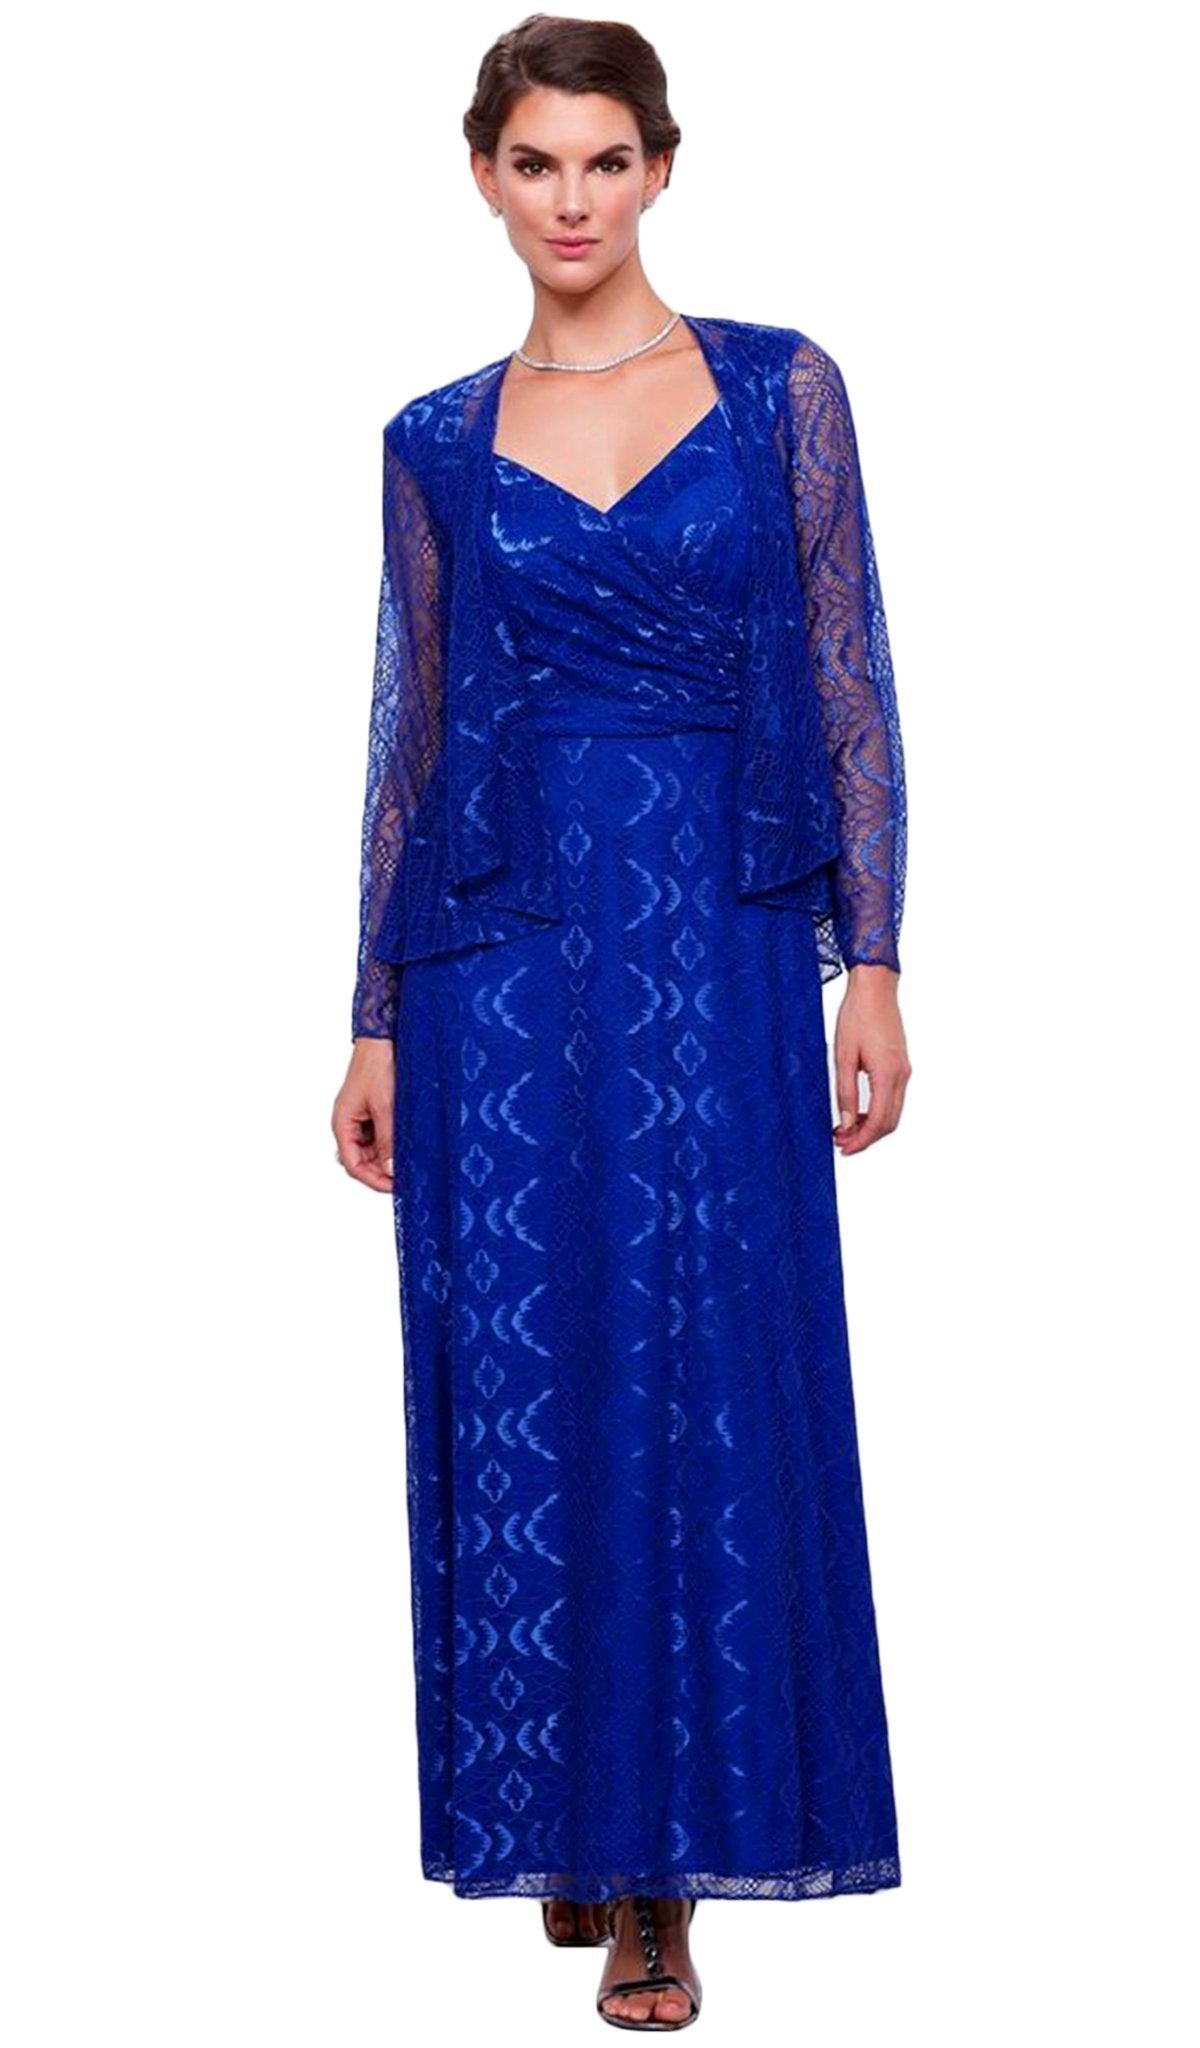 Nox Anabel - 5140 Lace V-Neck A-Line Dress Special Occasion Dress M / Royal Blue